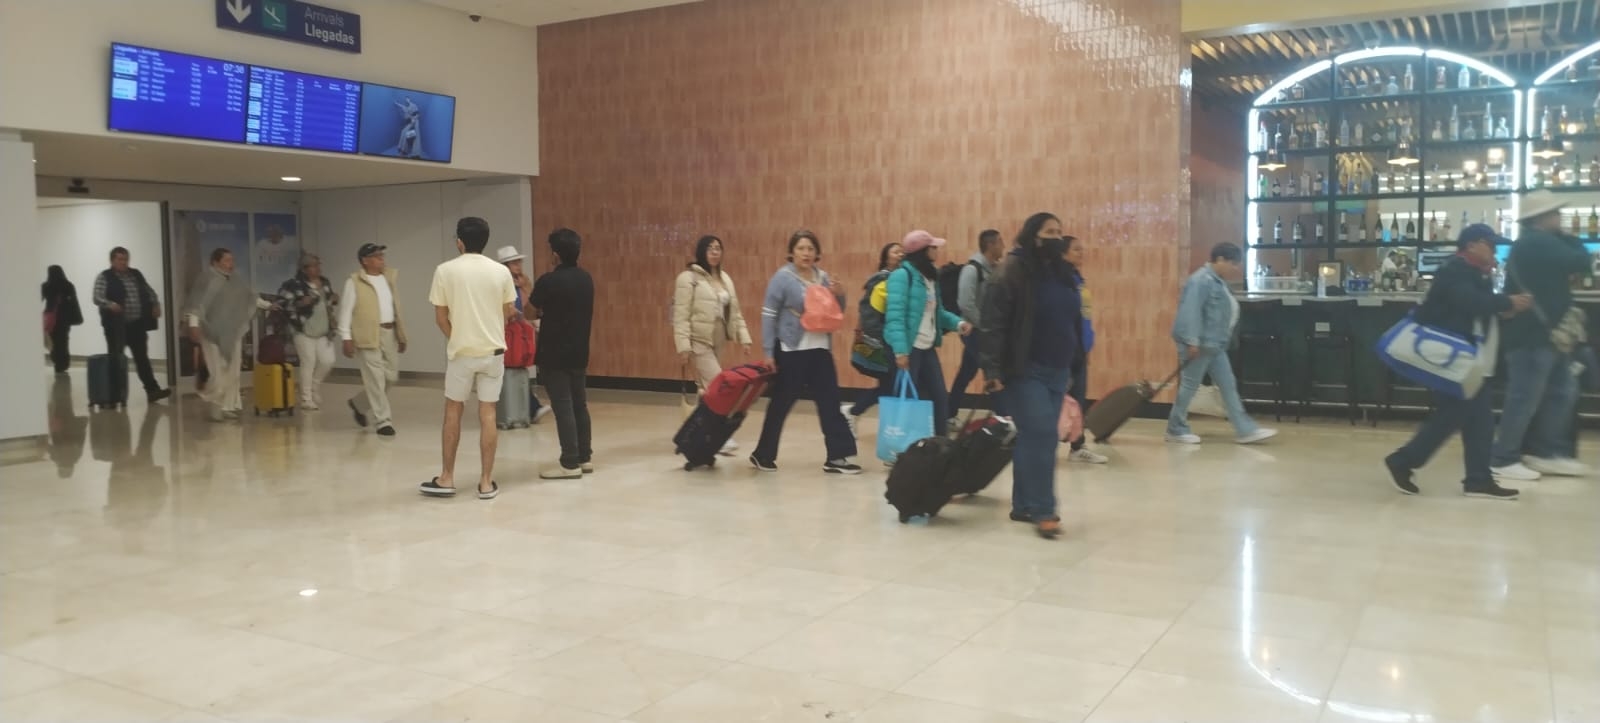 Son dos vuelos de Aeroméxico los cancelados en Mérida